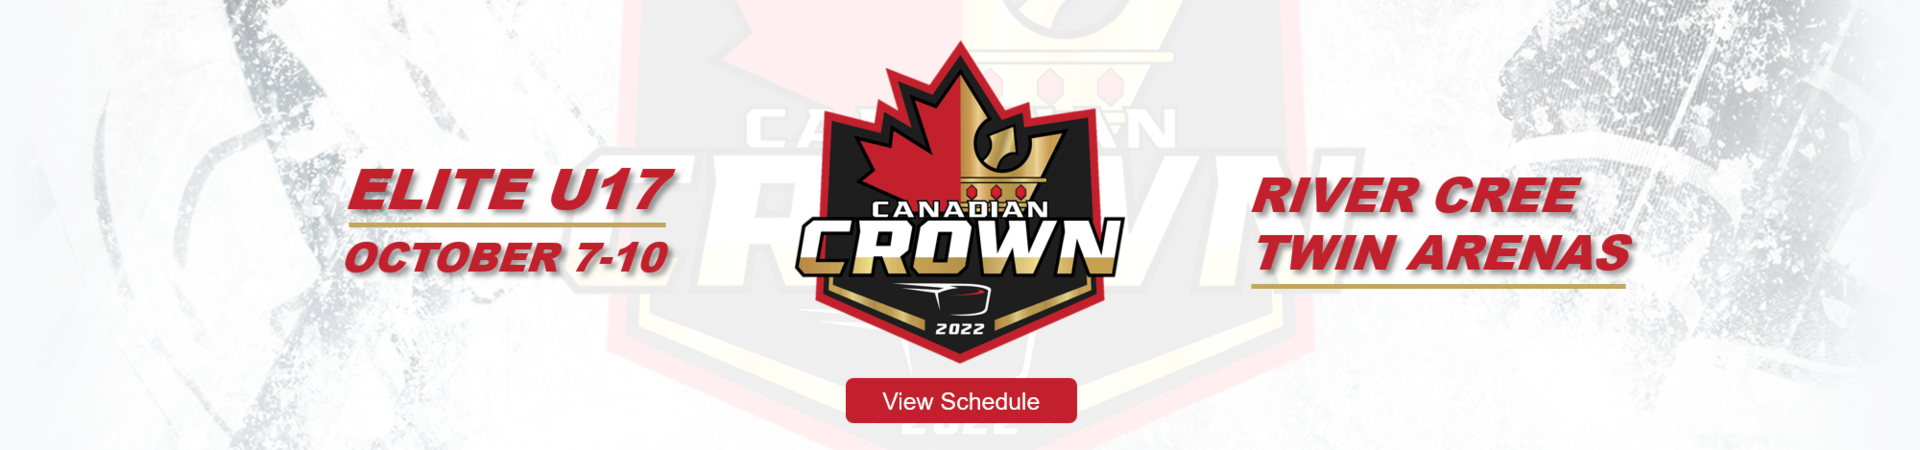 Canadian Crown U17